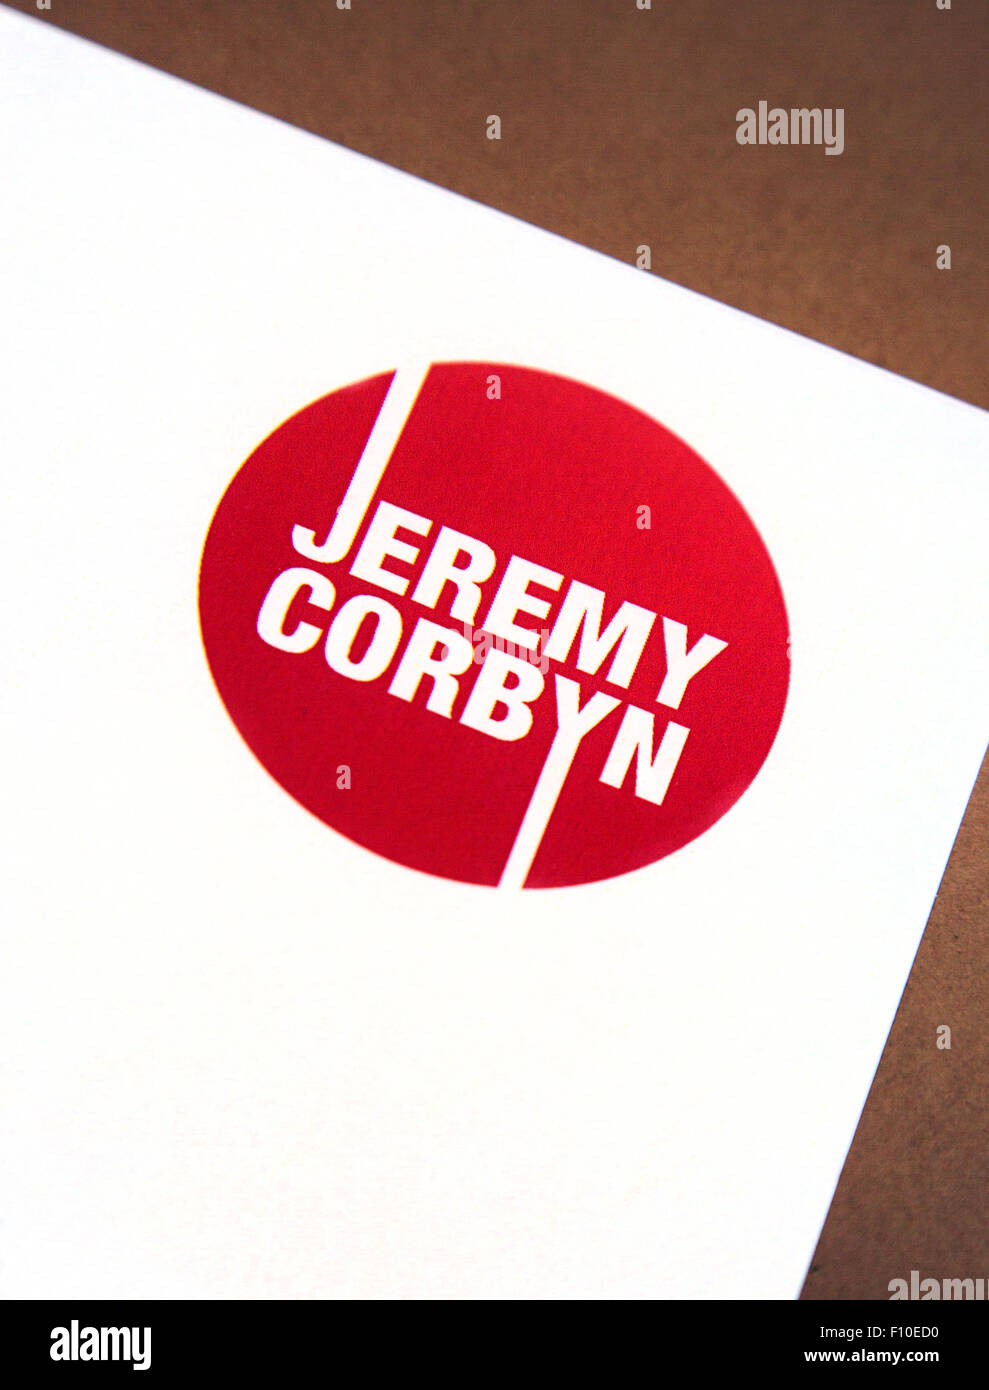 Jeremy Corbyn Labour Party leadership campaign logo, London Stock Photo